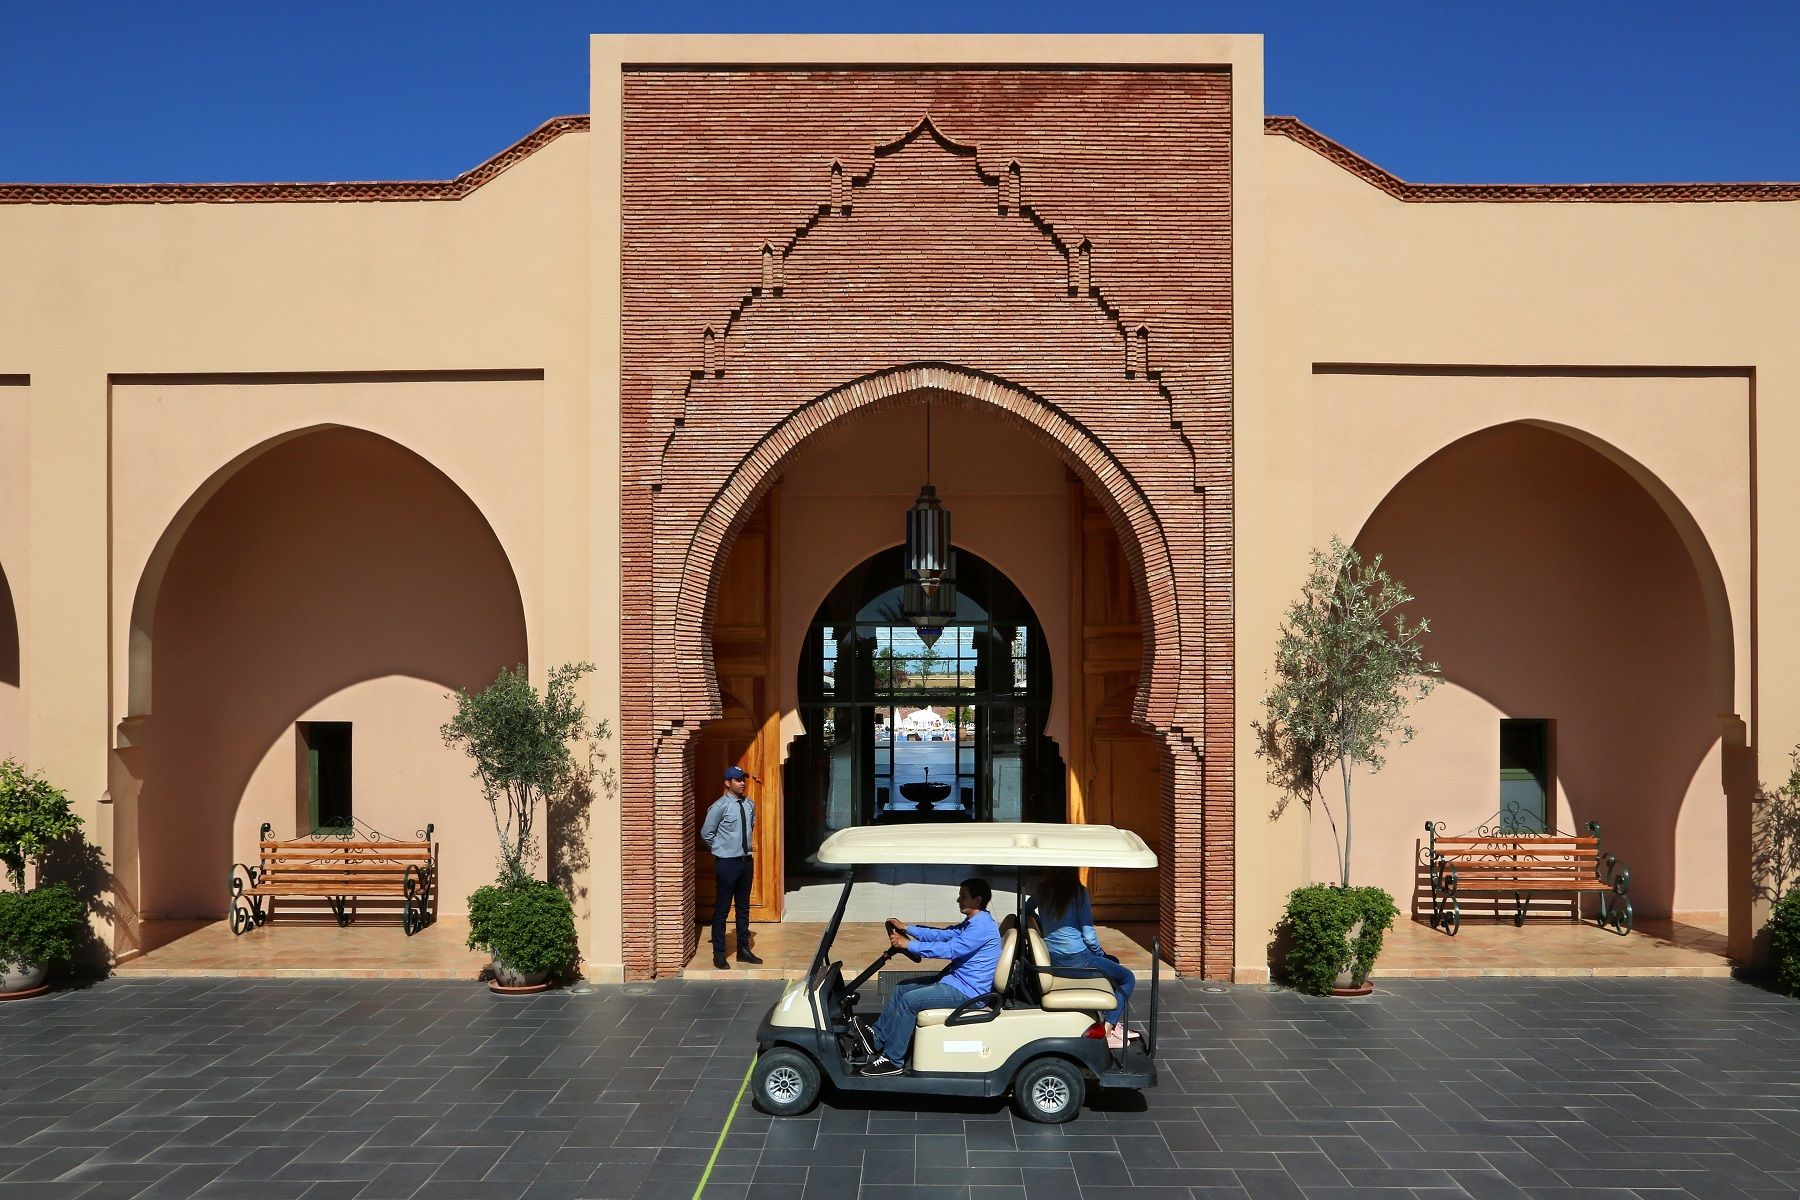 Hotel Club Dar Atlas Marrakech